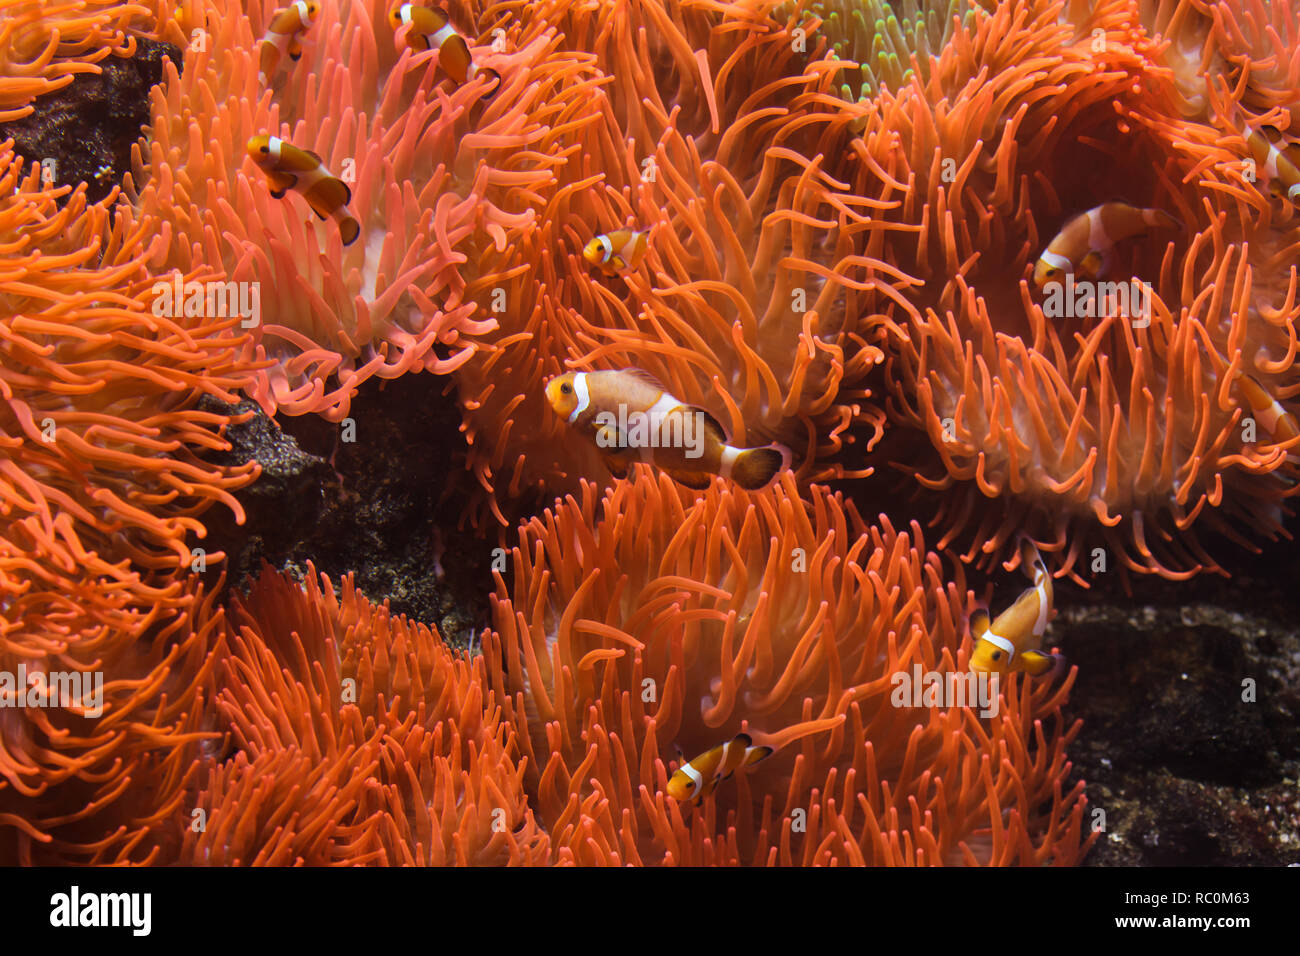 Ocellaris clownfish (Amphiprion ocellaris) swimming in the magnificent sea anemone (Heteractis magnifica). Stock Photo